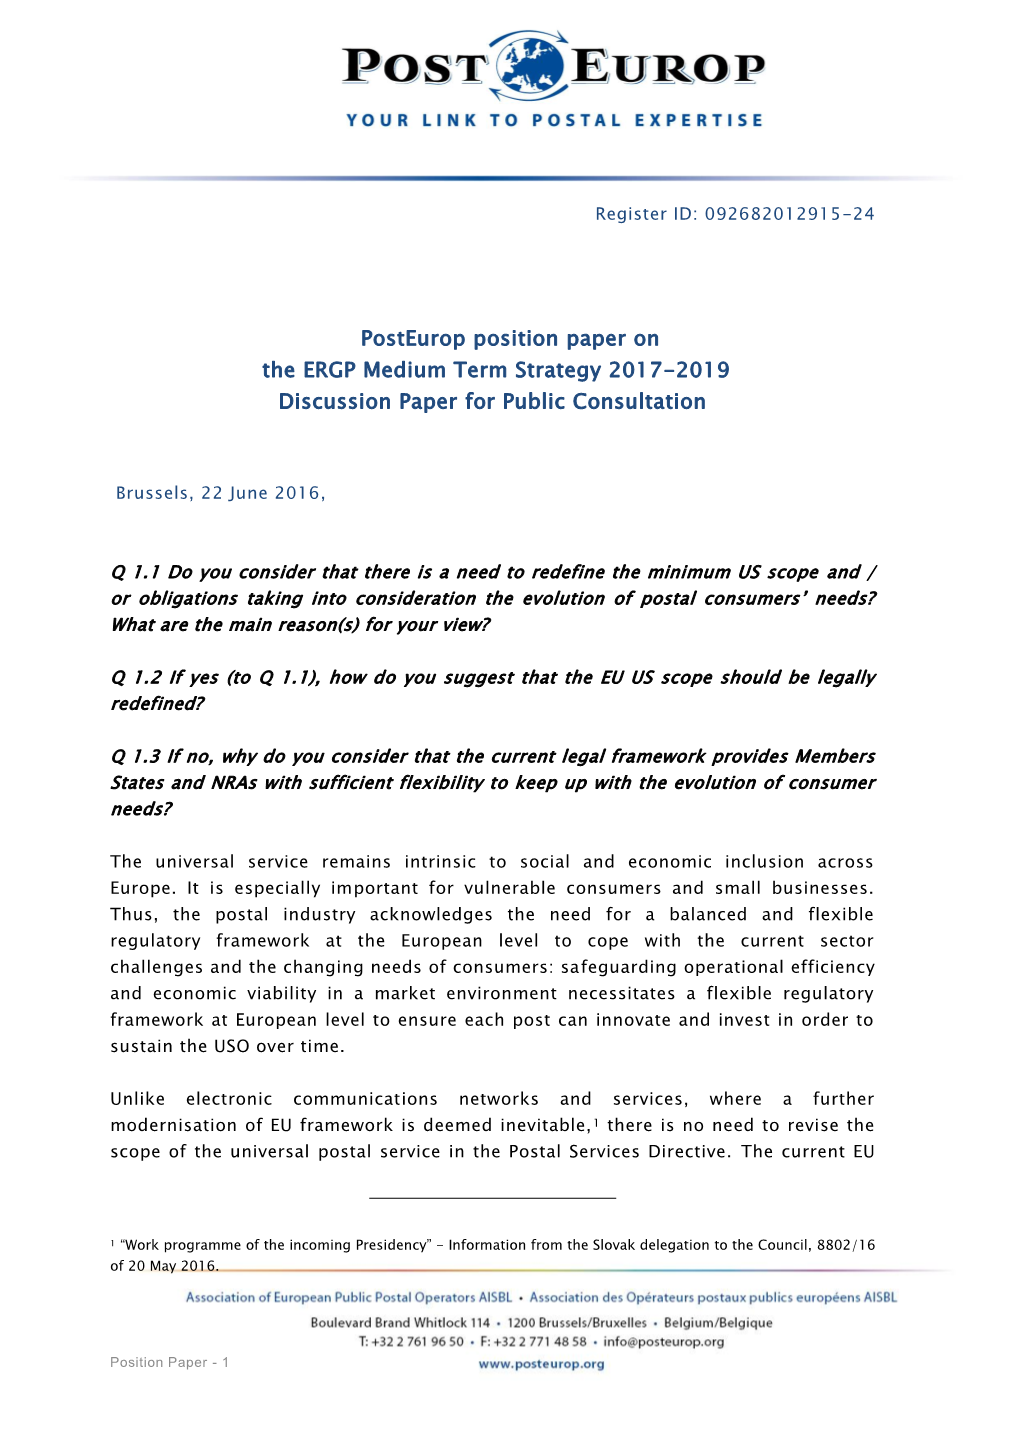 PE Position Paper on ERGP Medium Term Strategy